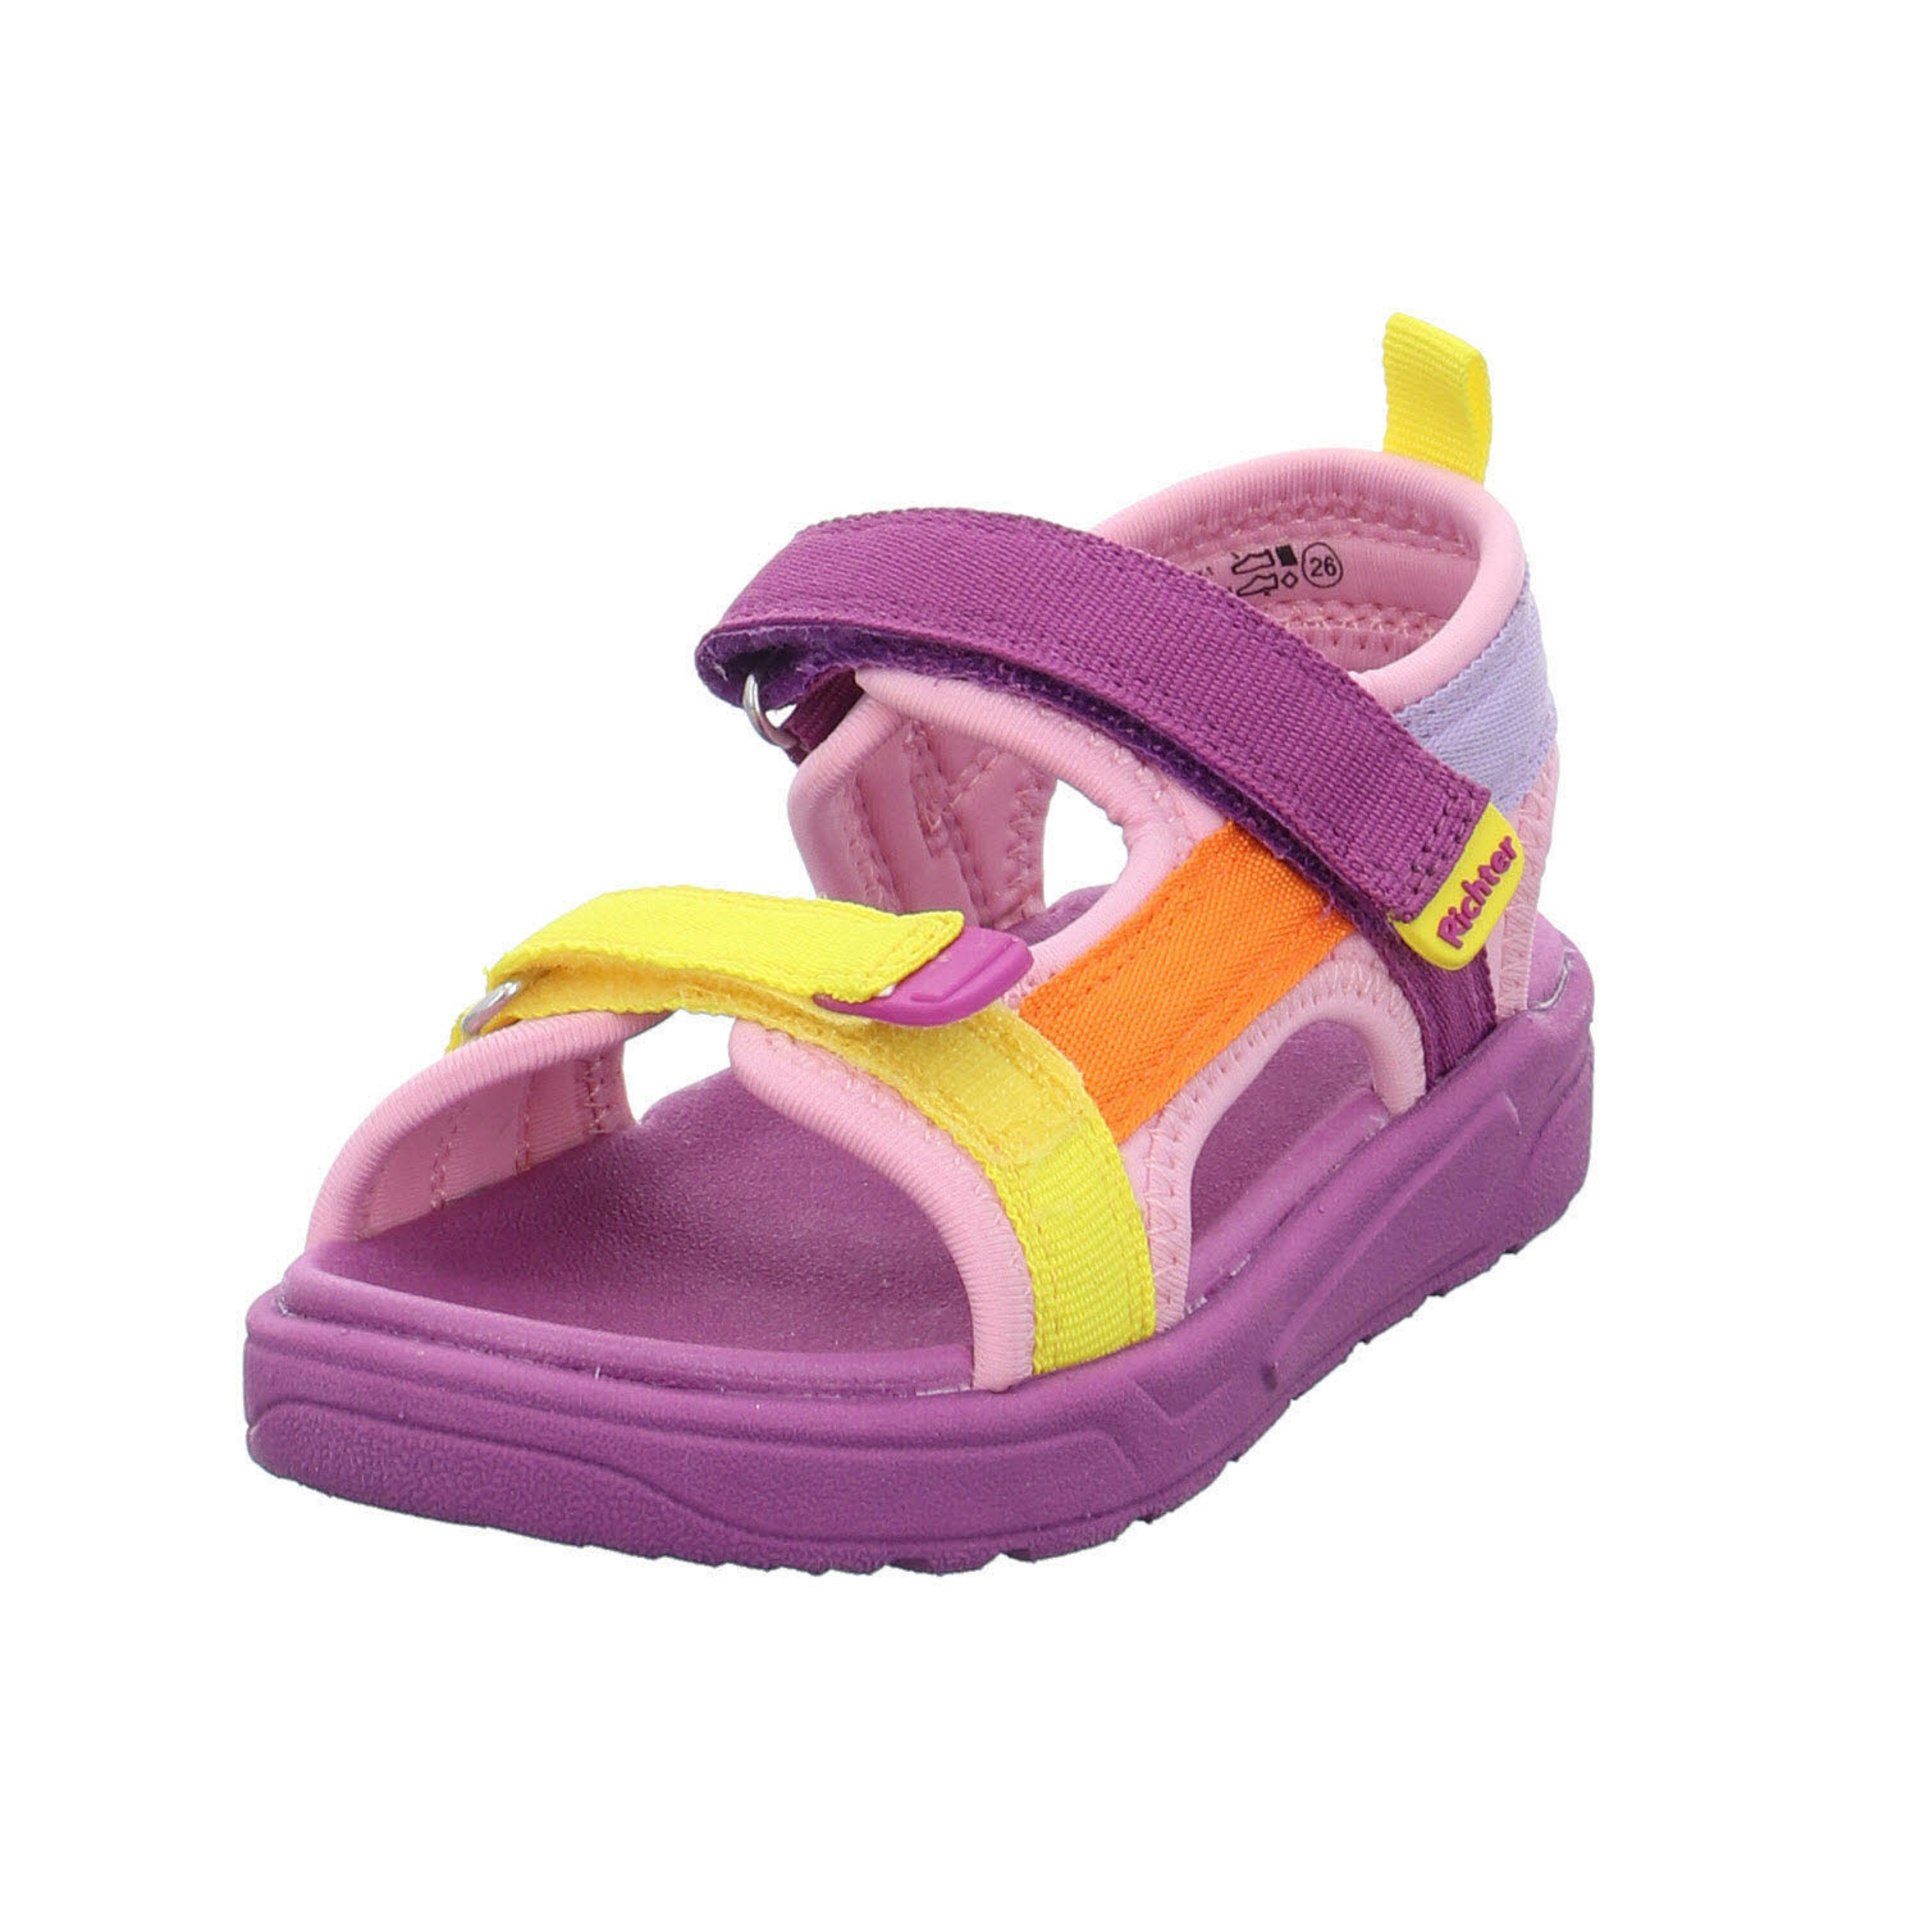 Richter »Mädchen Sandalen Schuhe Sandale Kinderschuhe« Sandale Textil  online kaufen | OTTO